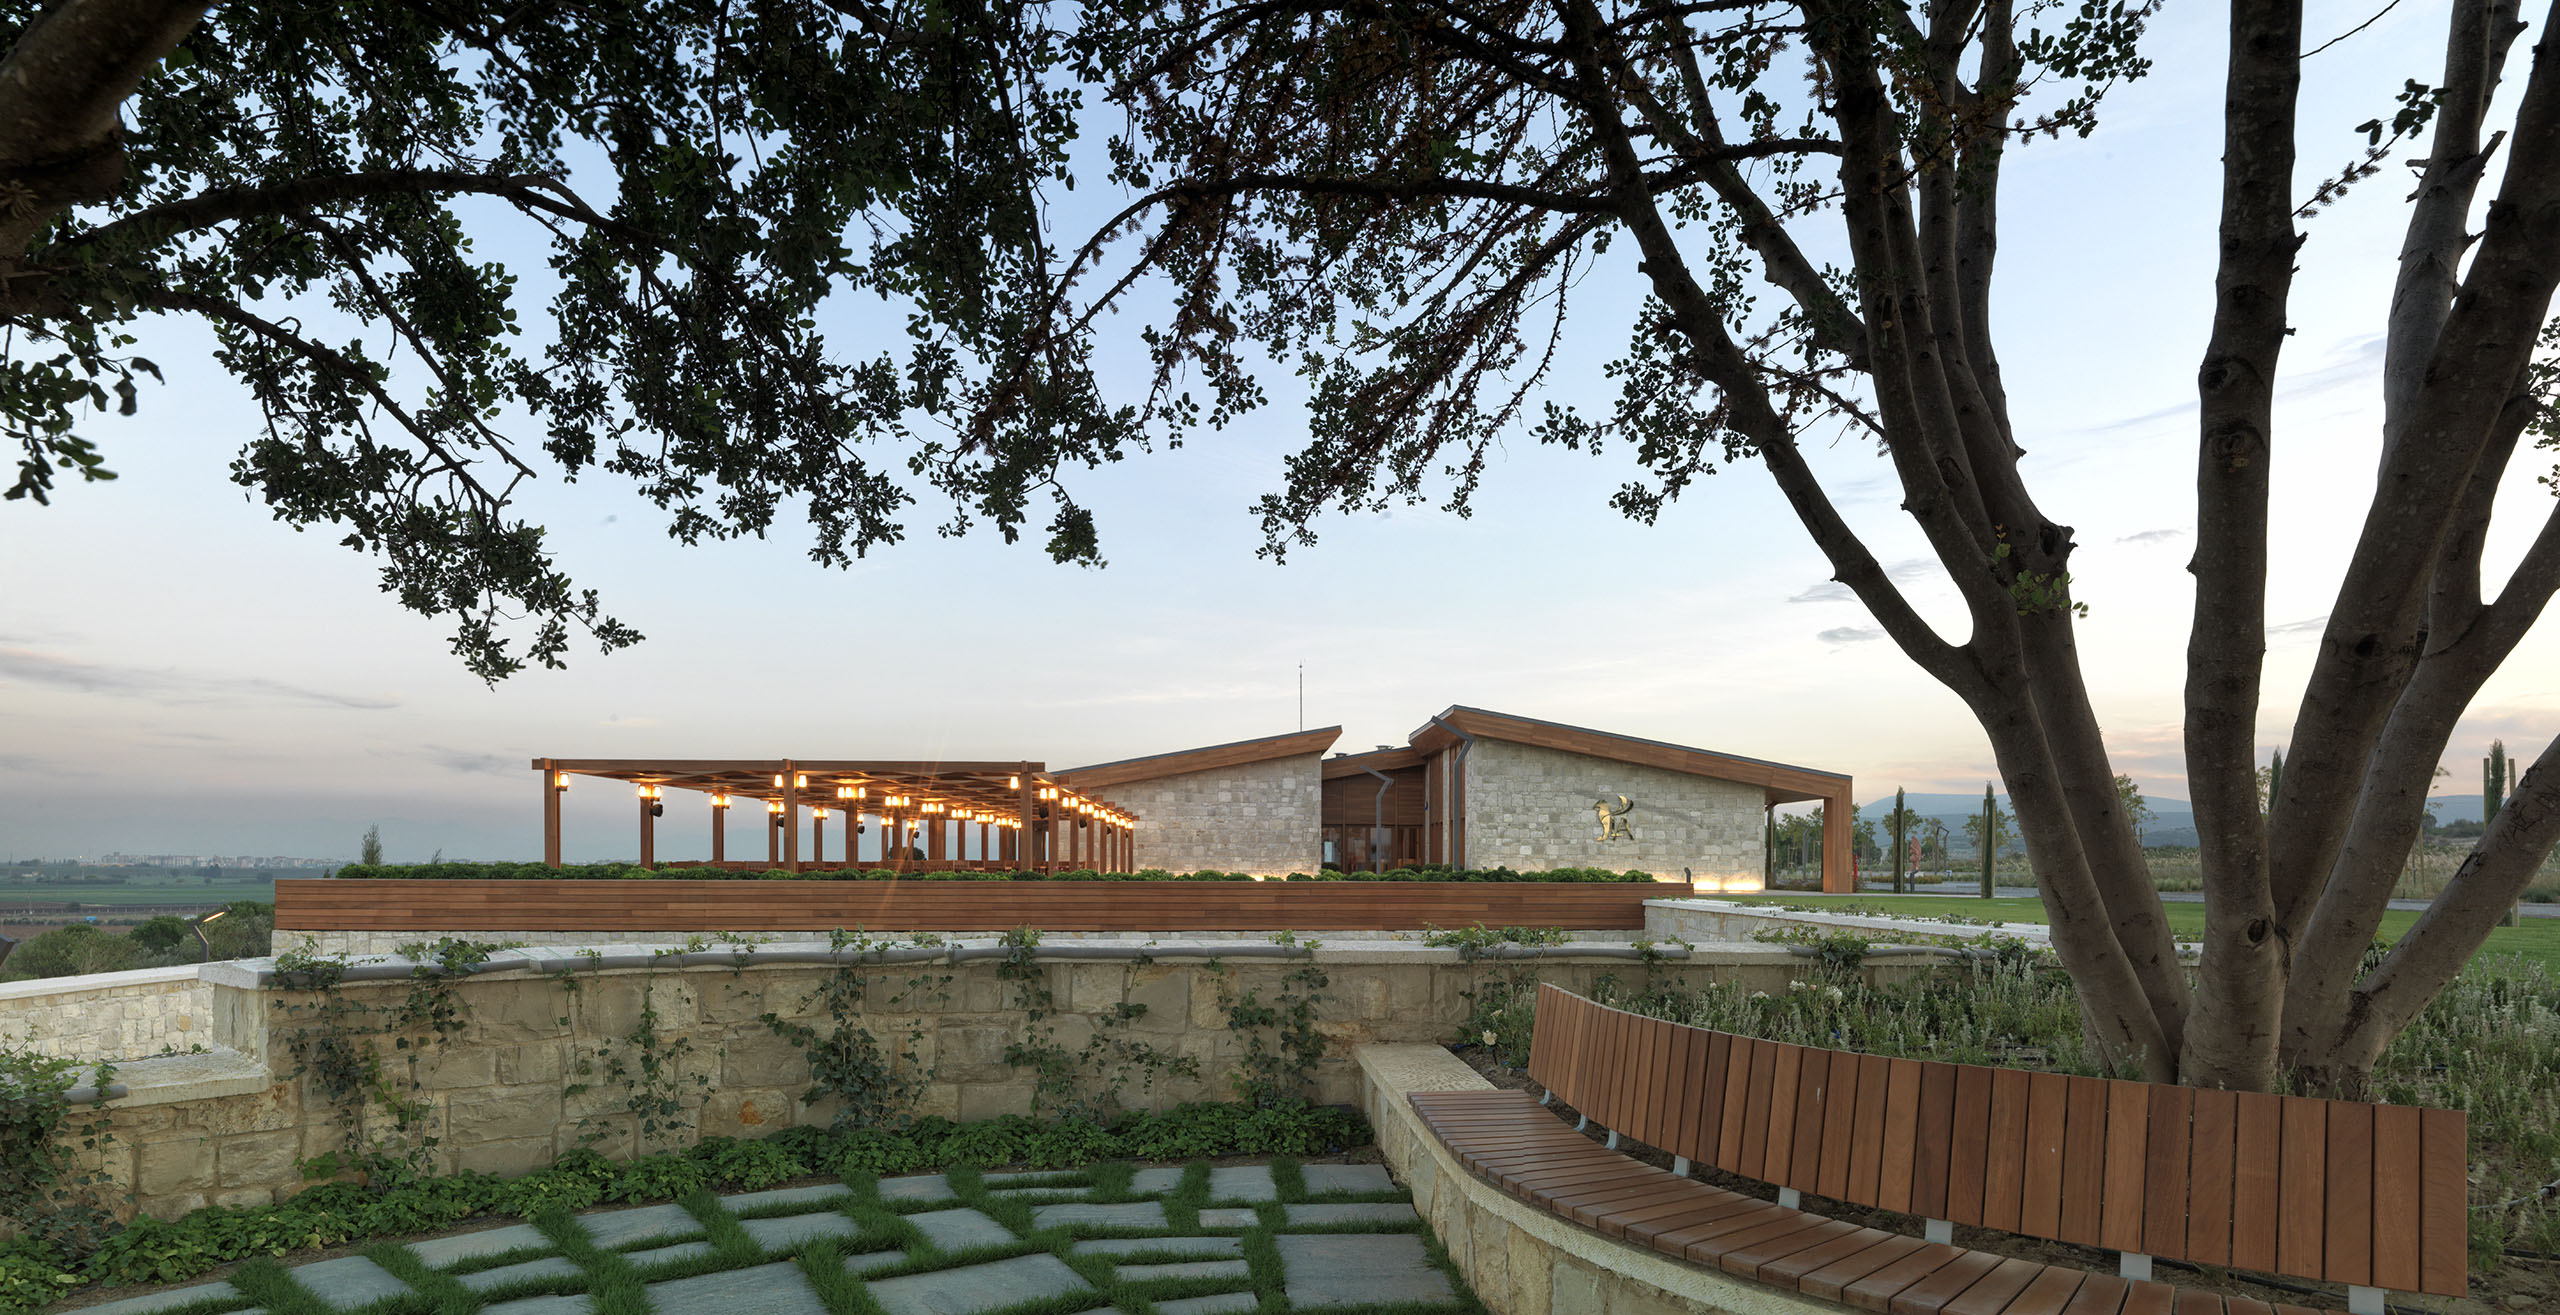 LA Winery, İzmir, Turkey by Kreatif Architects